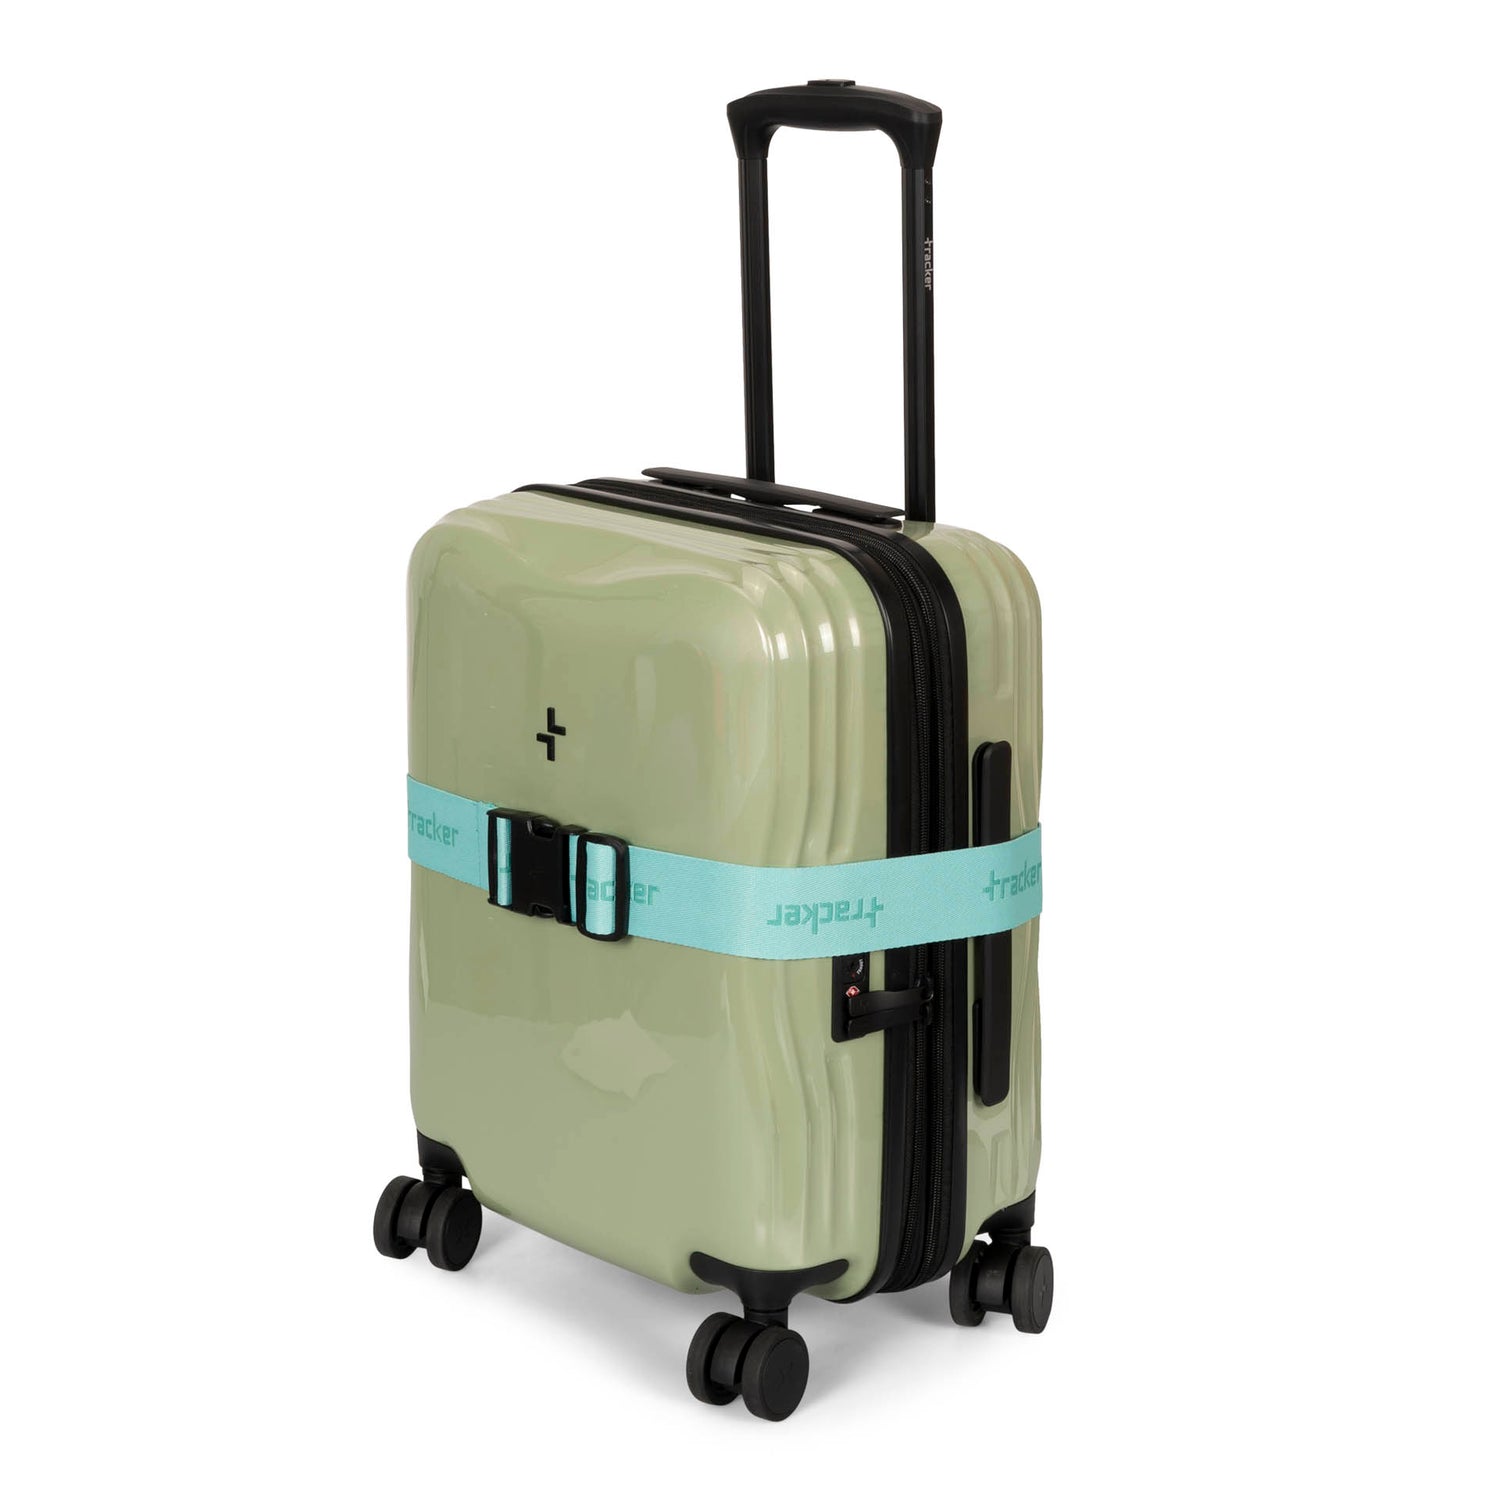 Tracker Sangle de bagage avec logo Tracker – Bentley